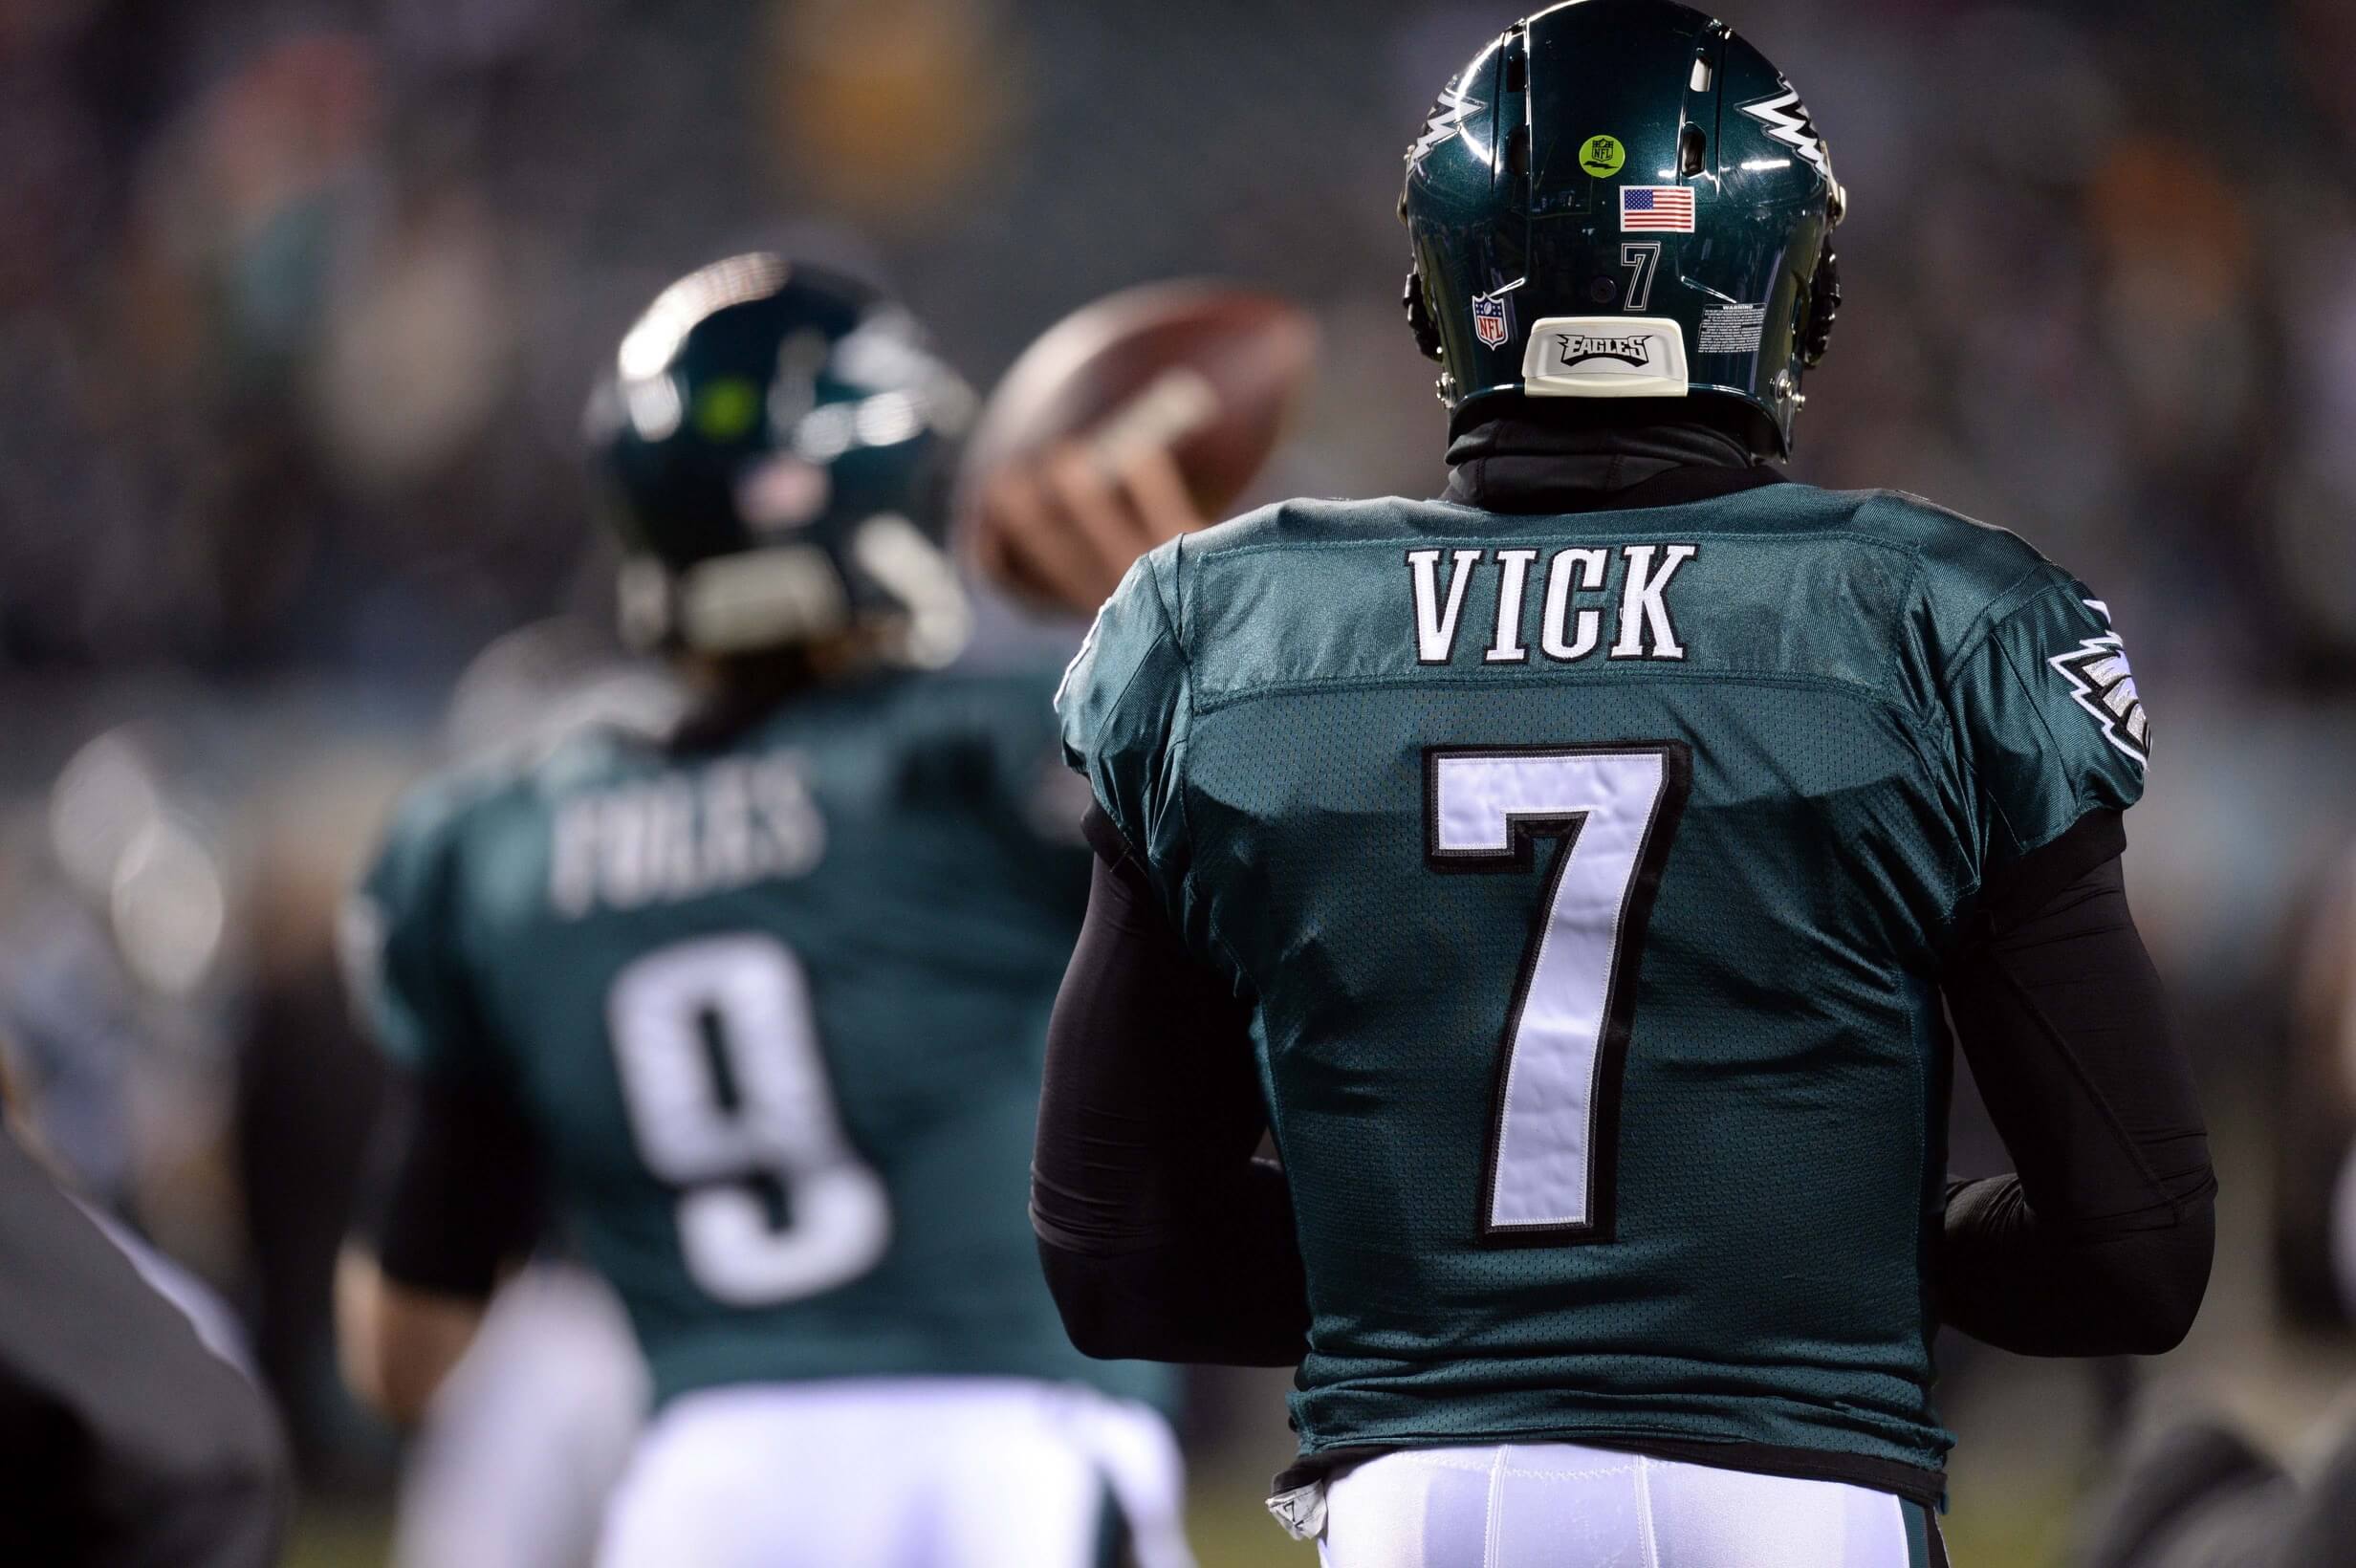 Former Eagles quarterback Michael Vick retires from the NFL